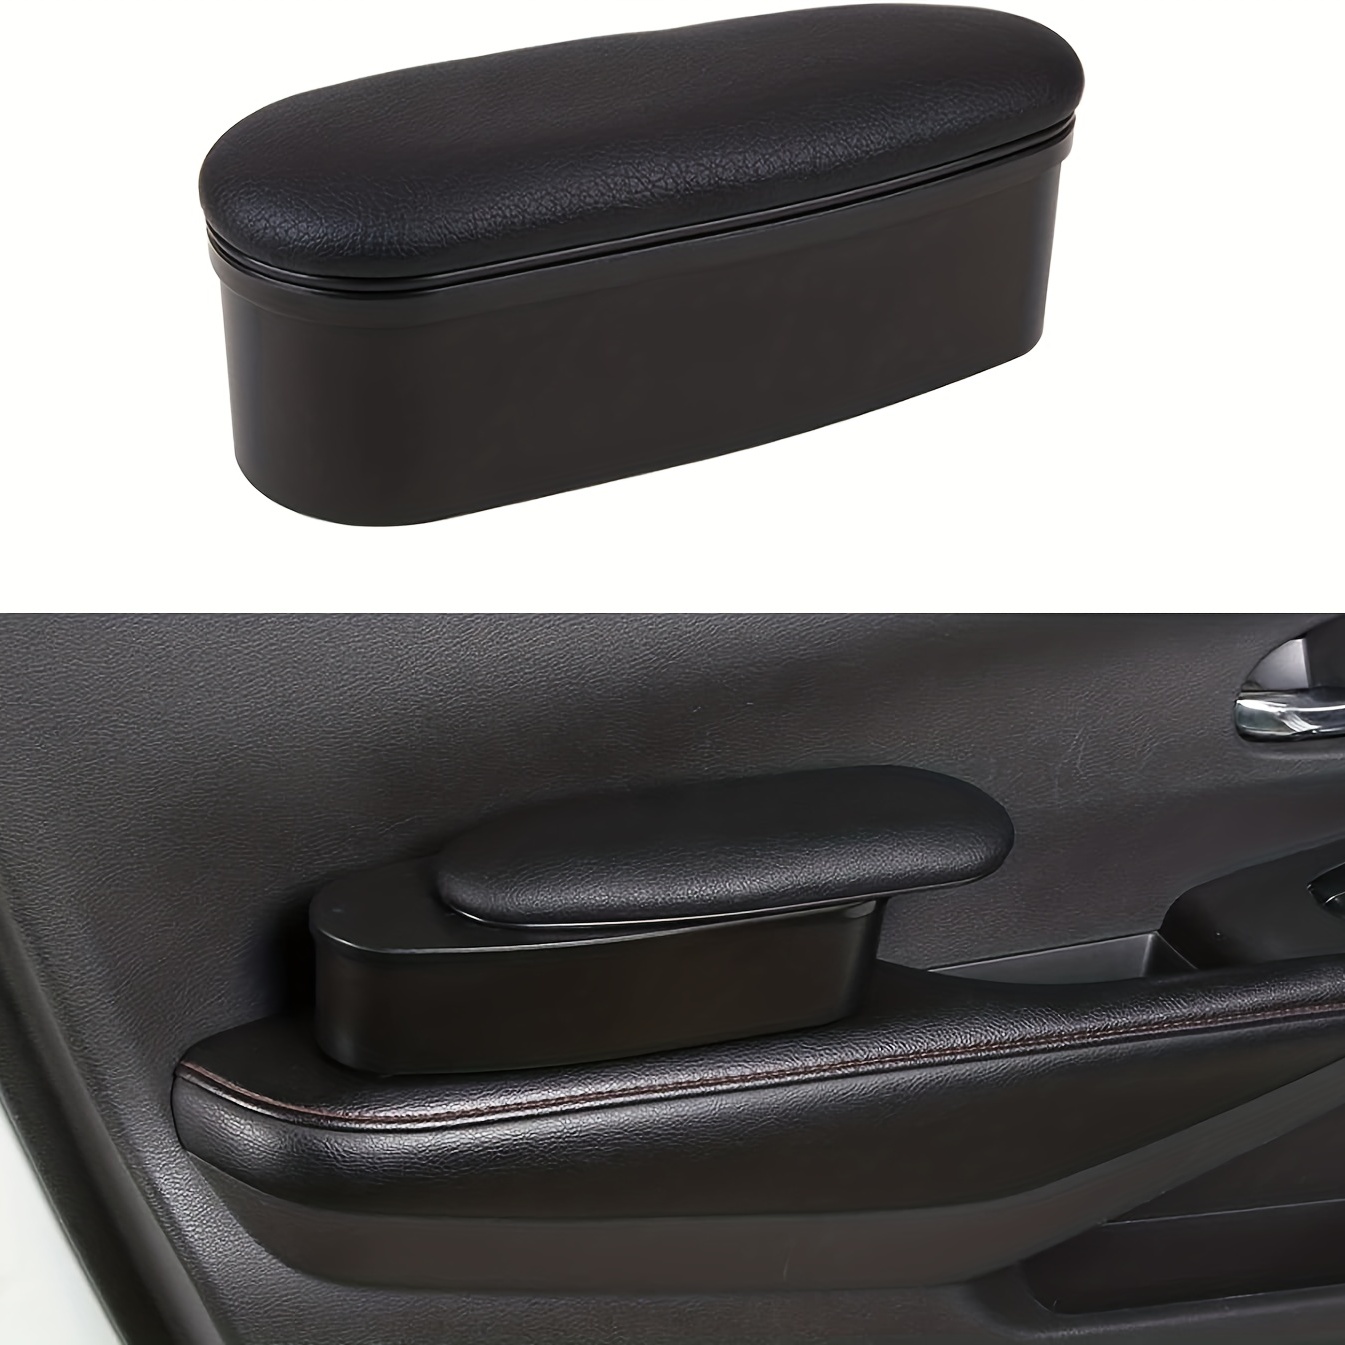 Car Armrest Cushion Leather Car mounted Central Increase Pad - Temu